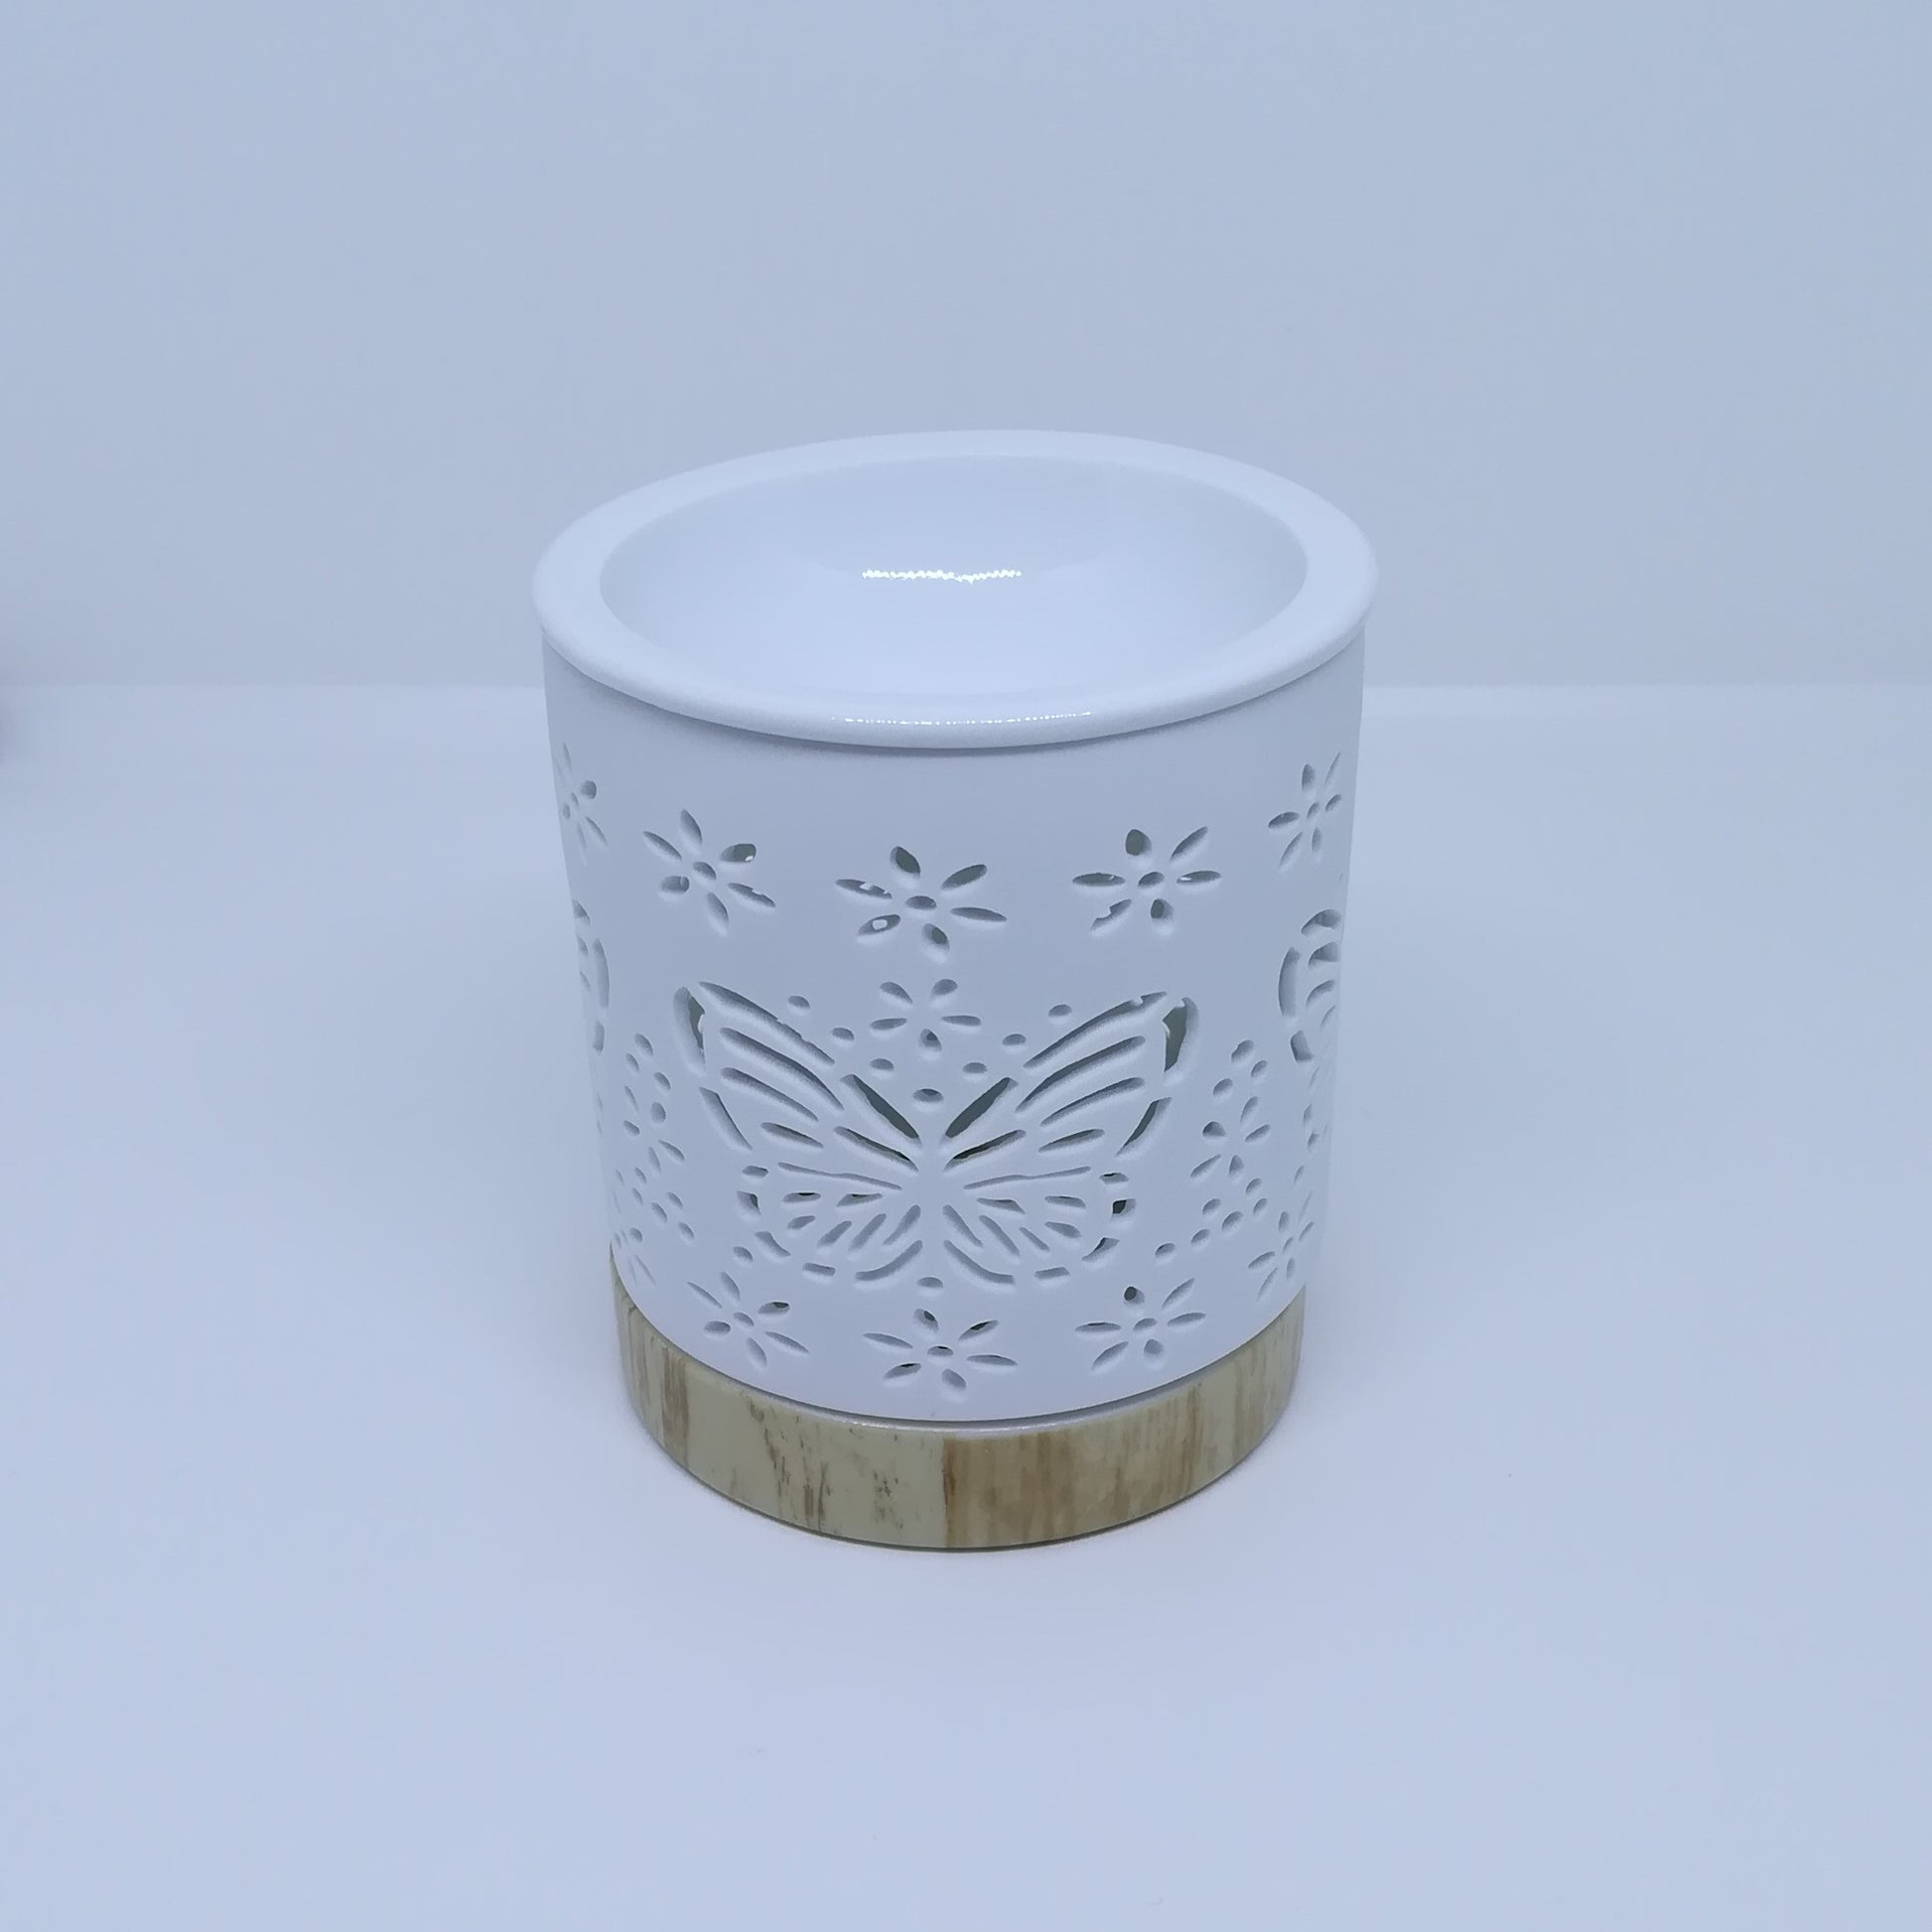 Ceramic white wax melt burner with ceramic wood effect base pictured under natural light.